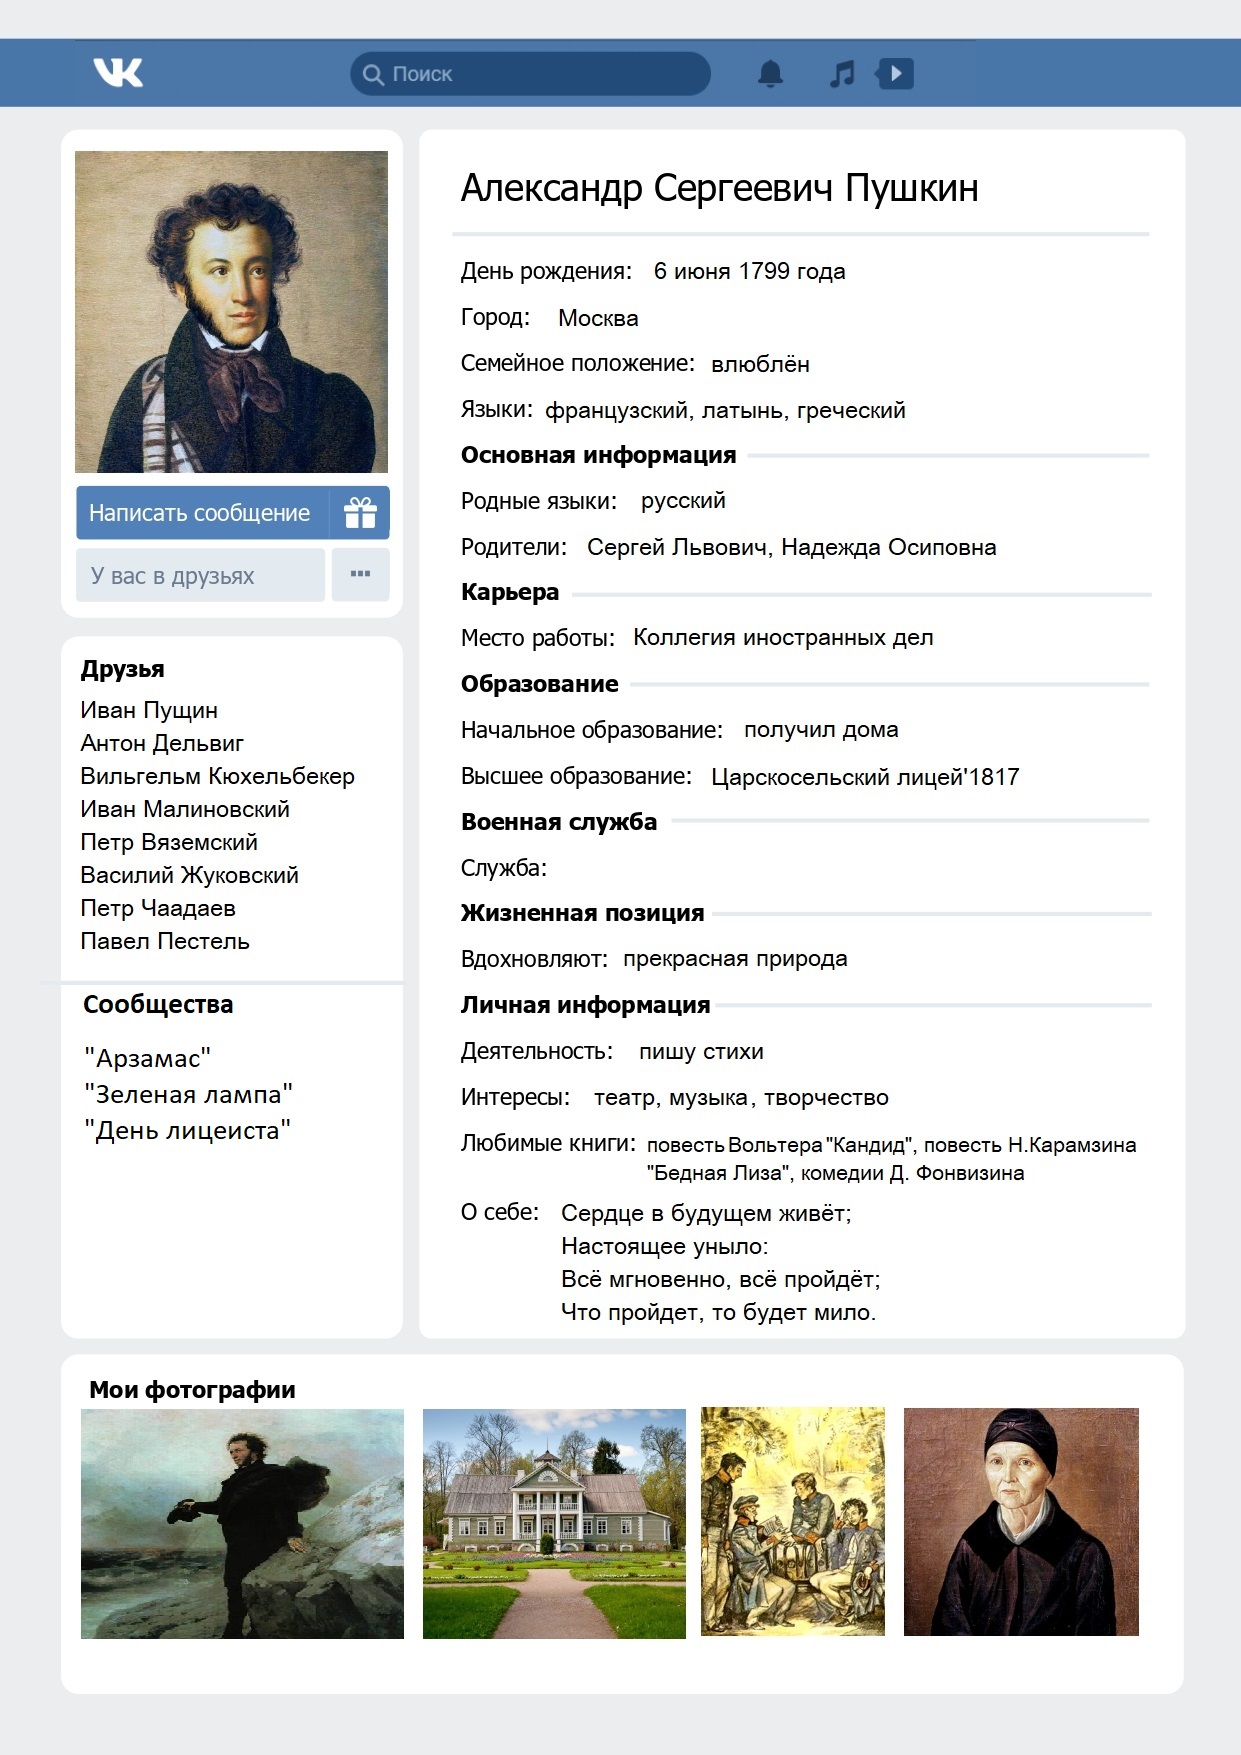 Интересная биография Александра Сергеевича Пушкина